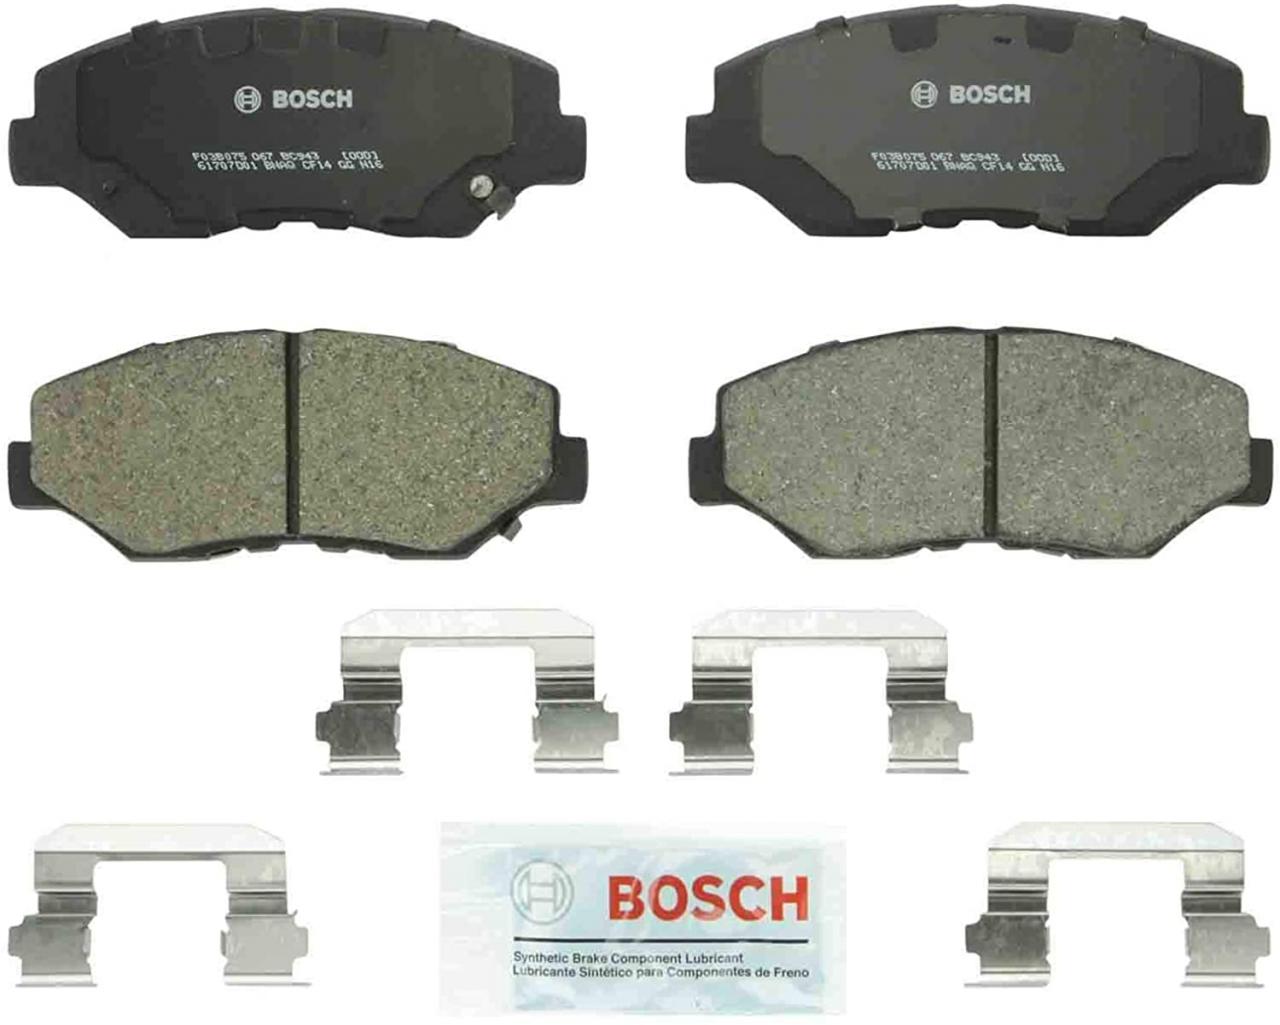 Buy Bosch BC943 QuietCast Premium Ceramic Disc Brake Pad Set For: Honda  Accord, Pilot, Front Online in Vietnam. B0081RVEJK